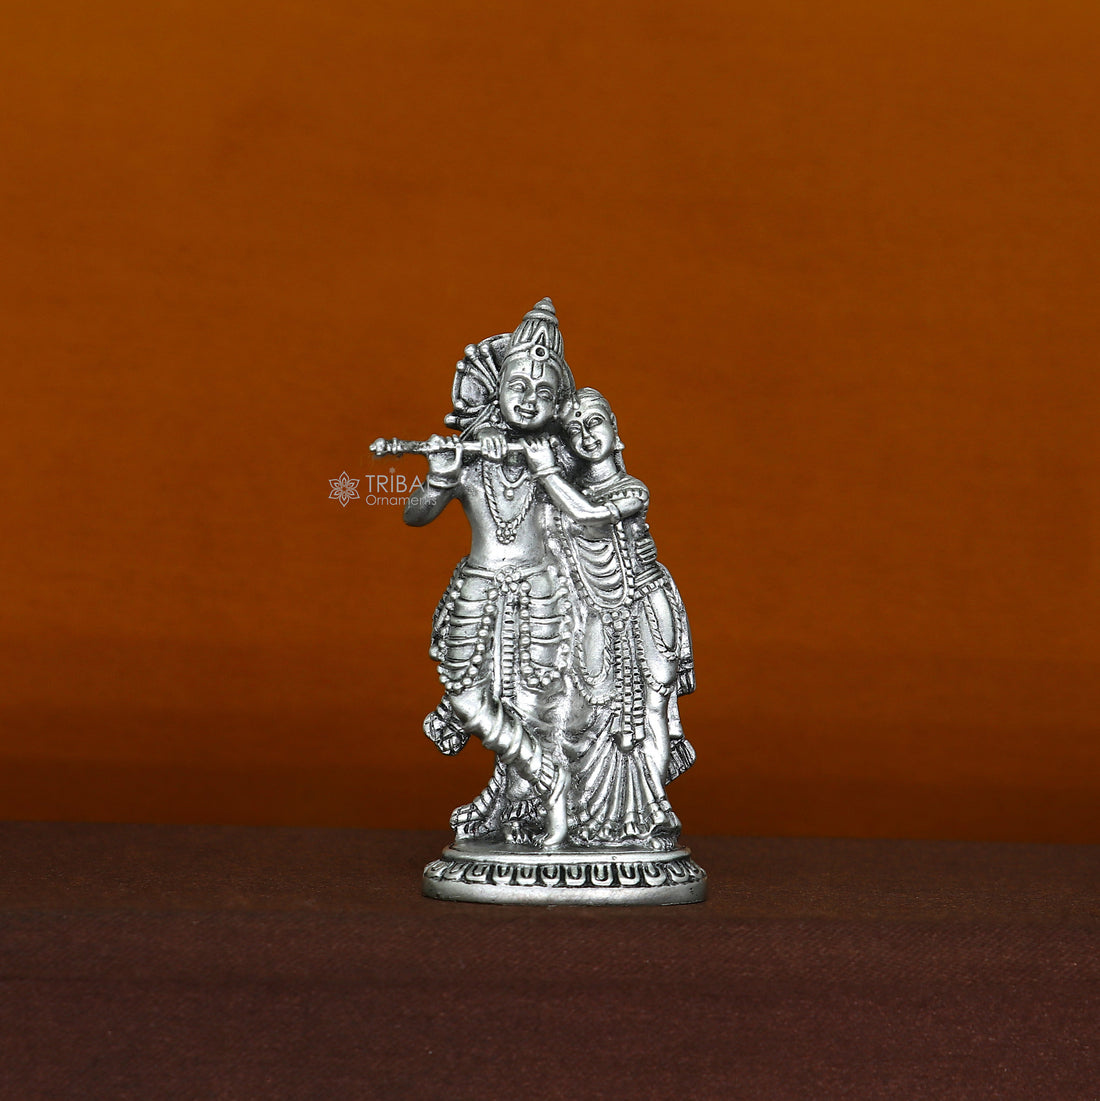 925 Solid sterling silver handmade idol Radha Krishna small statue, amazing lord krishna figurine sculpture puja temple articles art686 - TRIBAL ORNAMENTS